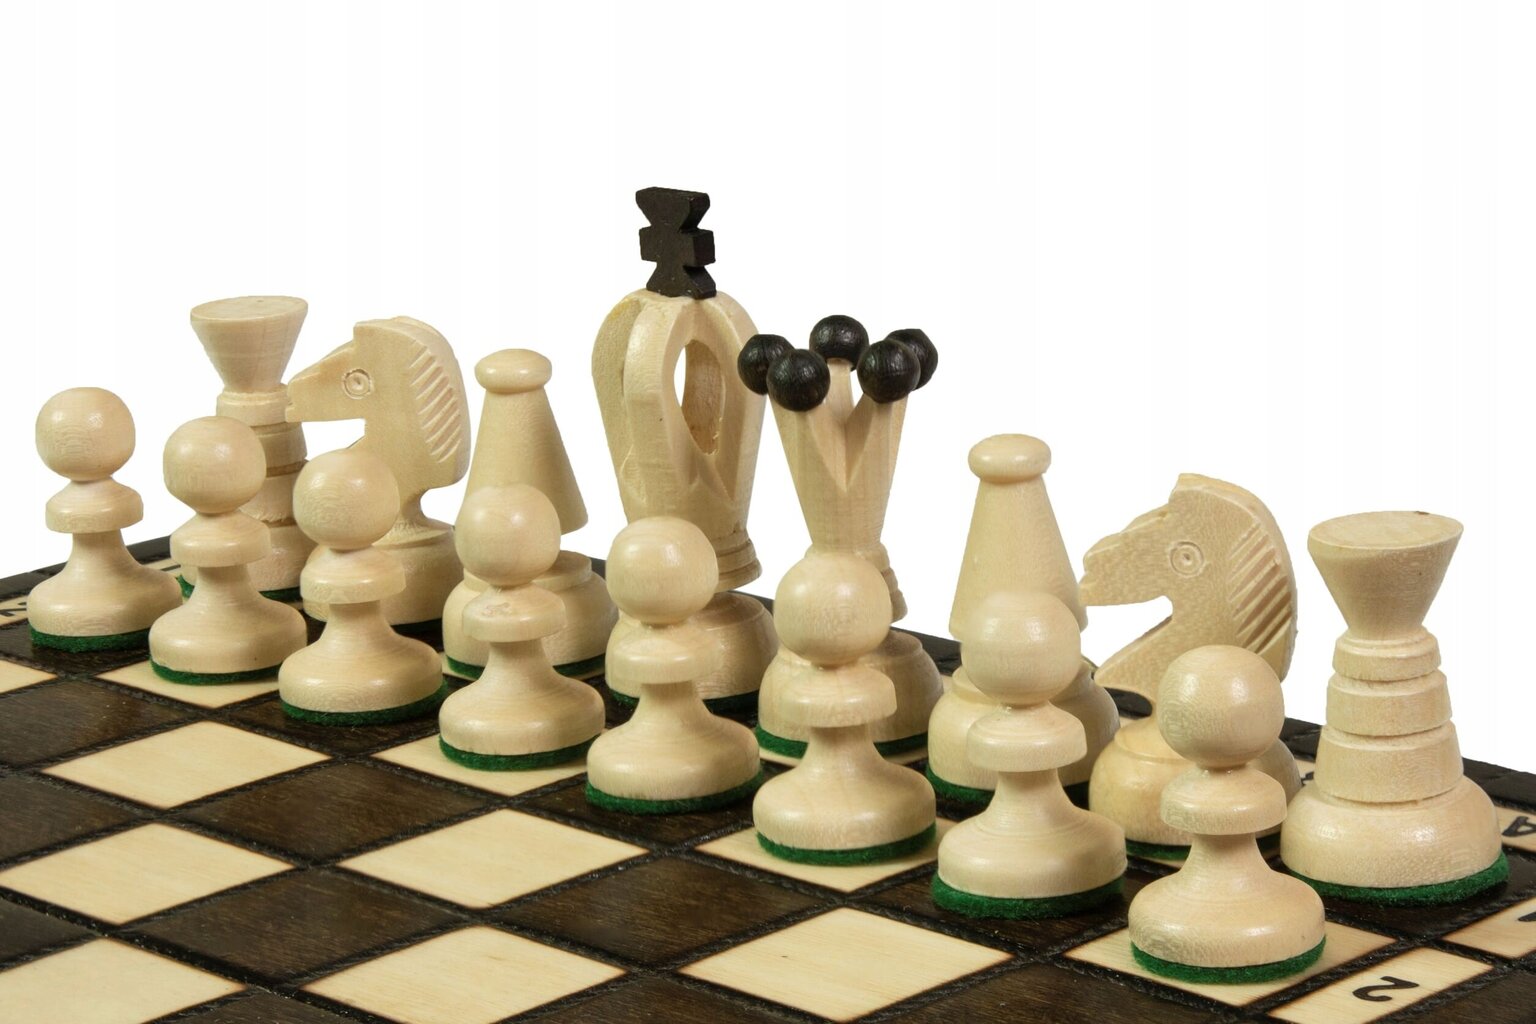 Приложения в Google Play – Chess Royale: шахматы онлайн